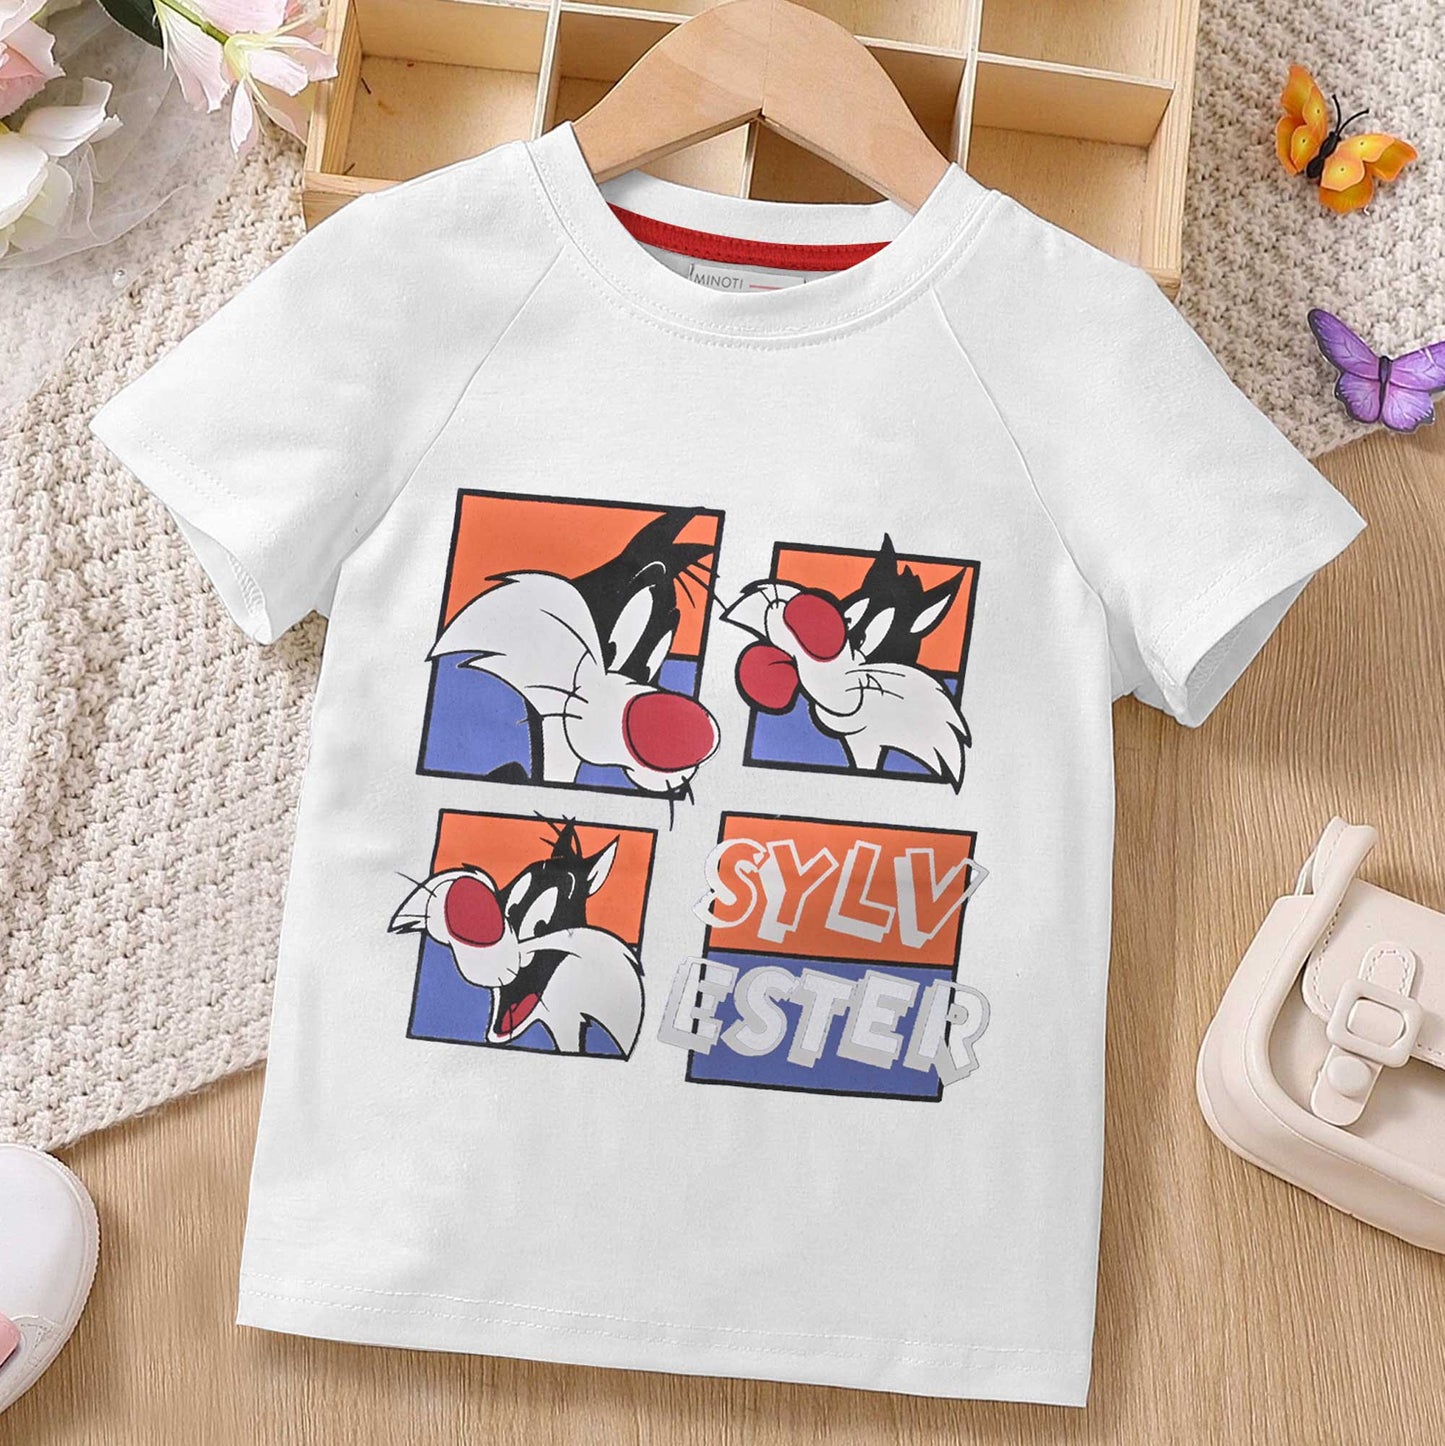 Minoti Kid's Sylv Ester Printed Tee Shirt Boy's Tee Shirt SZK White 3-4 Years 